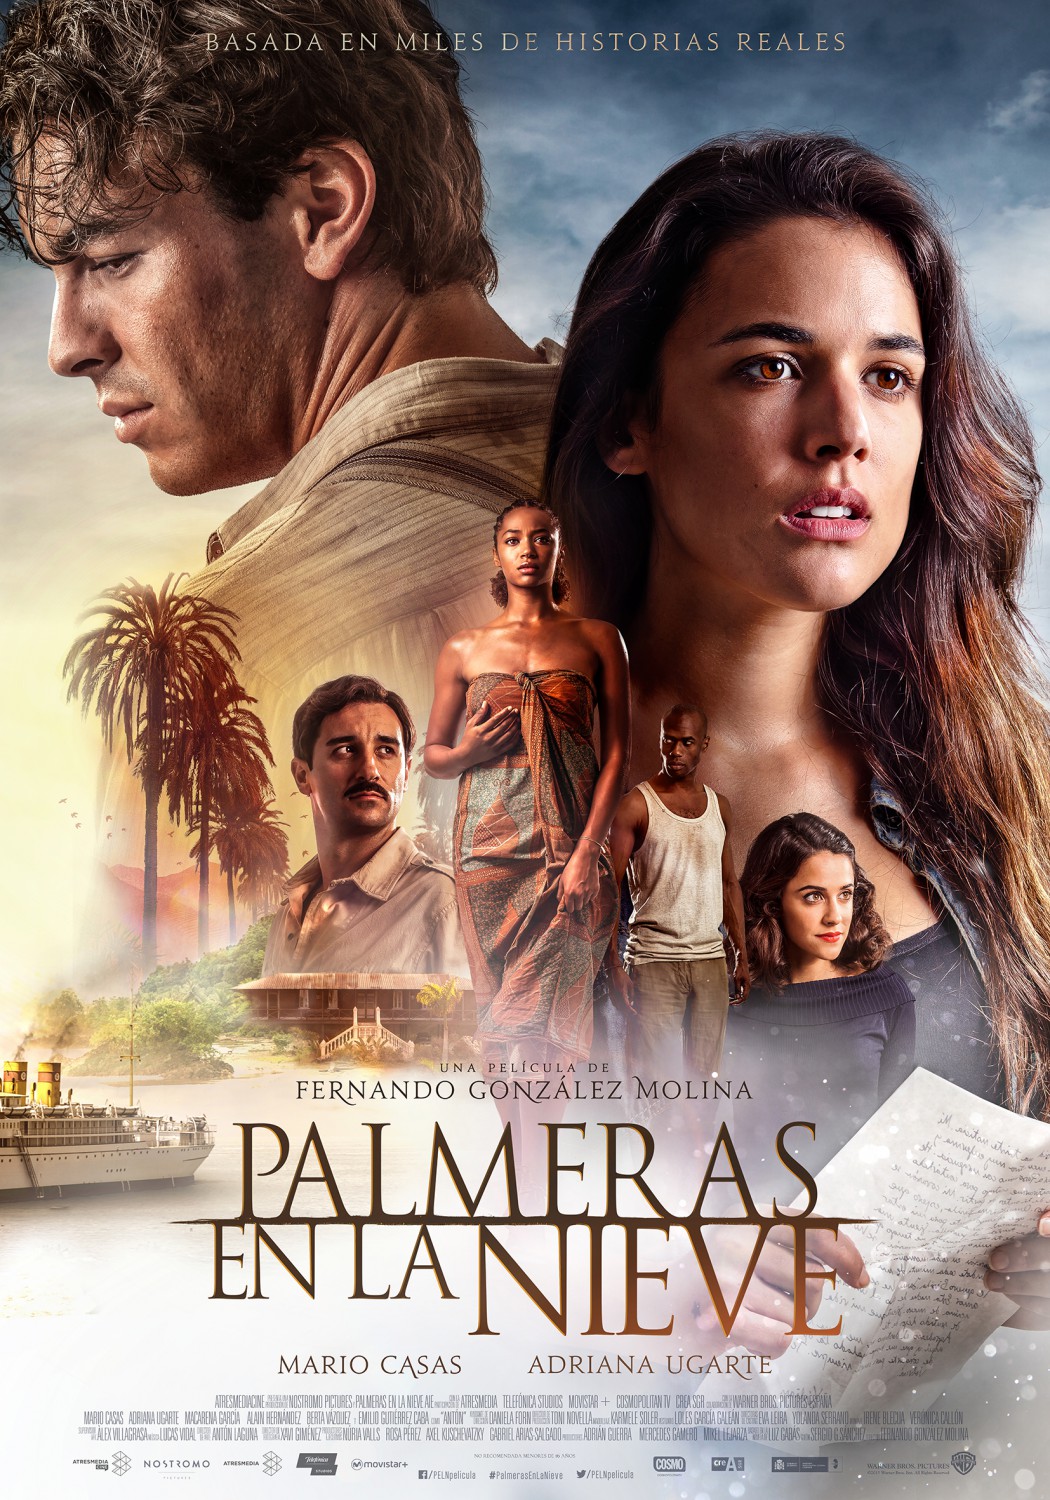 Extra Large Movie Poster Image for Palmeras en la nieve (#3 of 6)